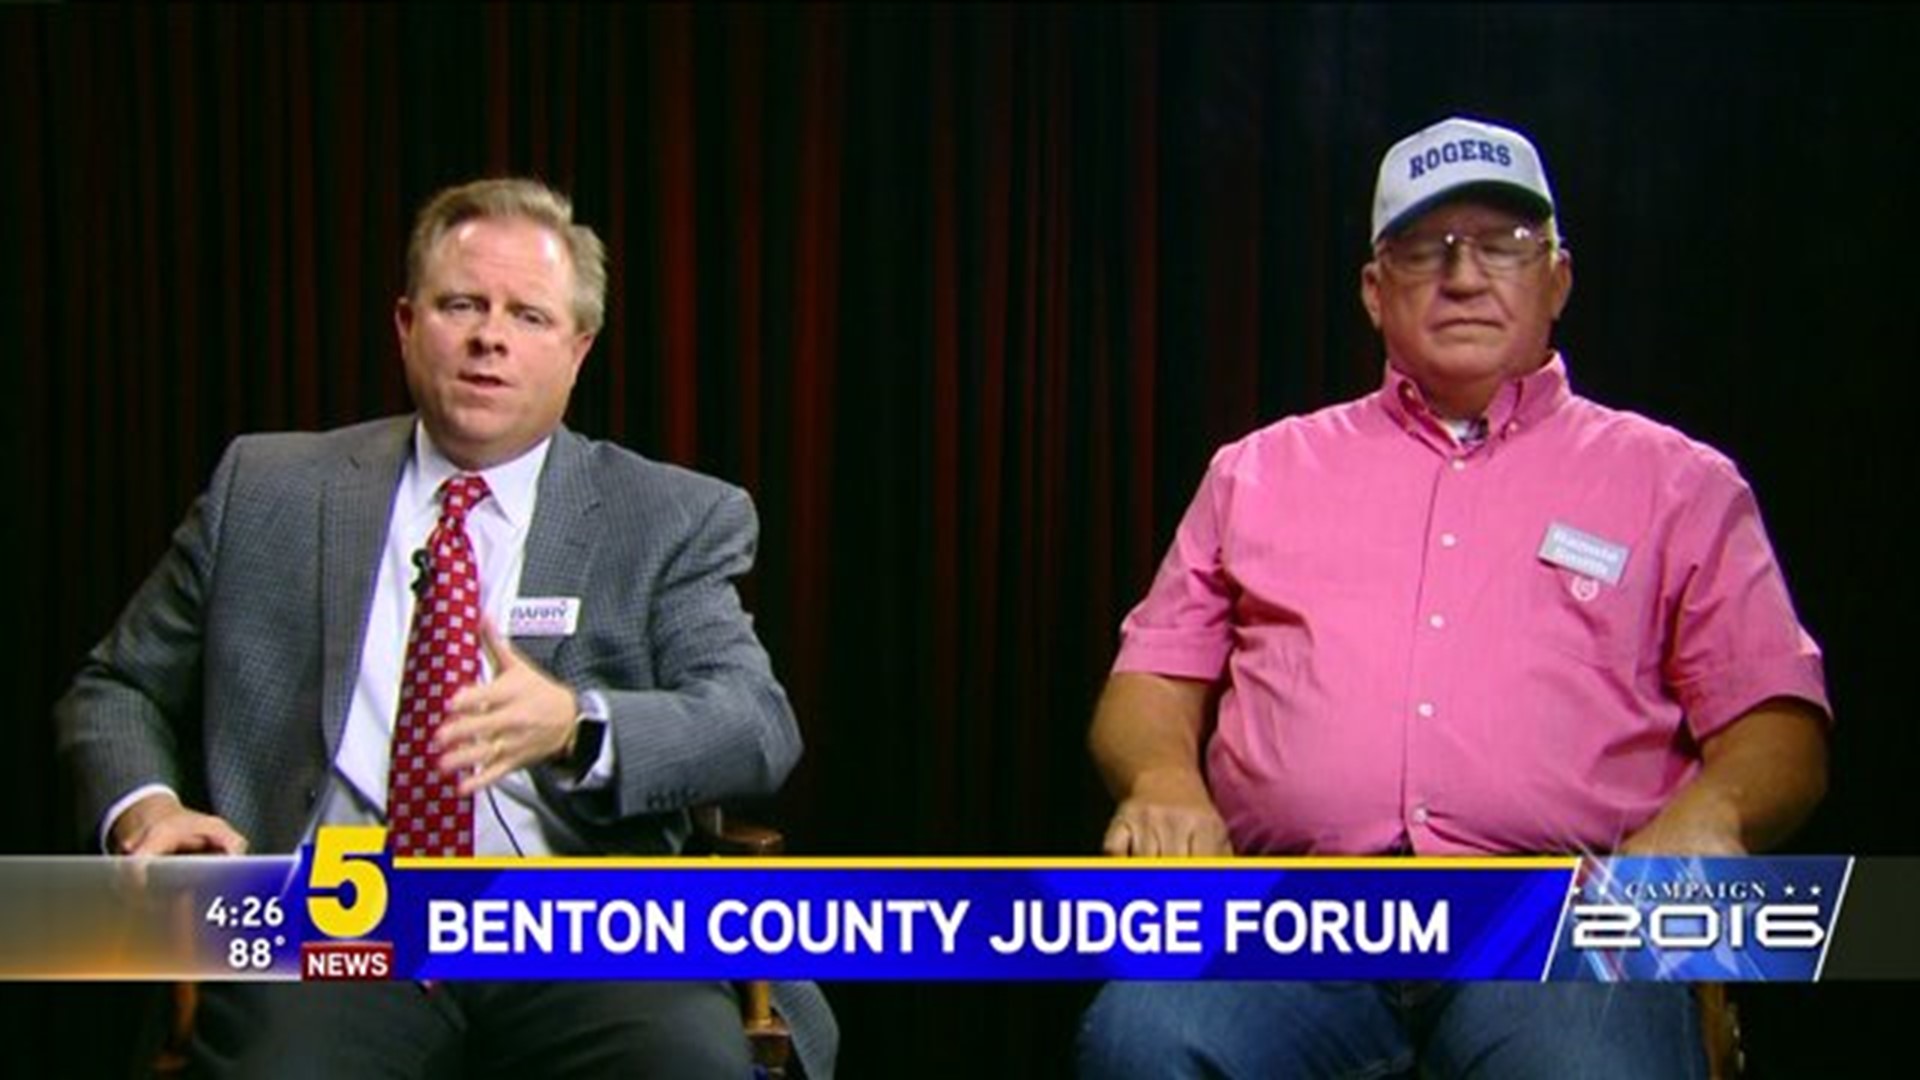 Benton County Judge Forum Part 3